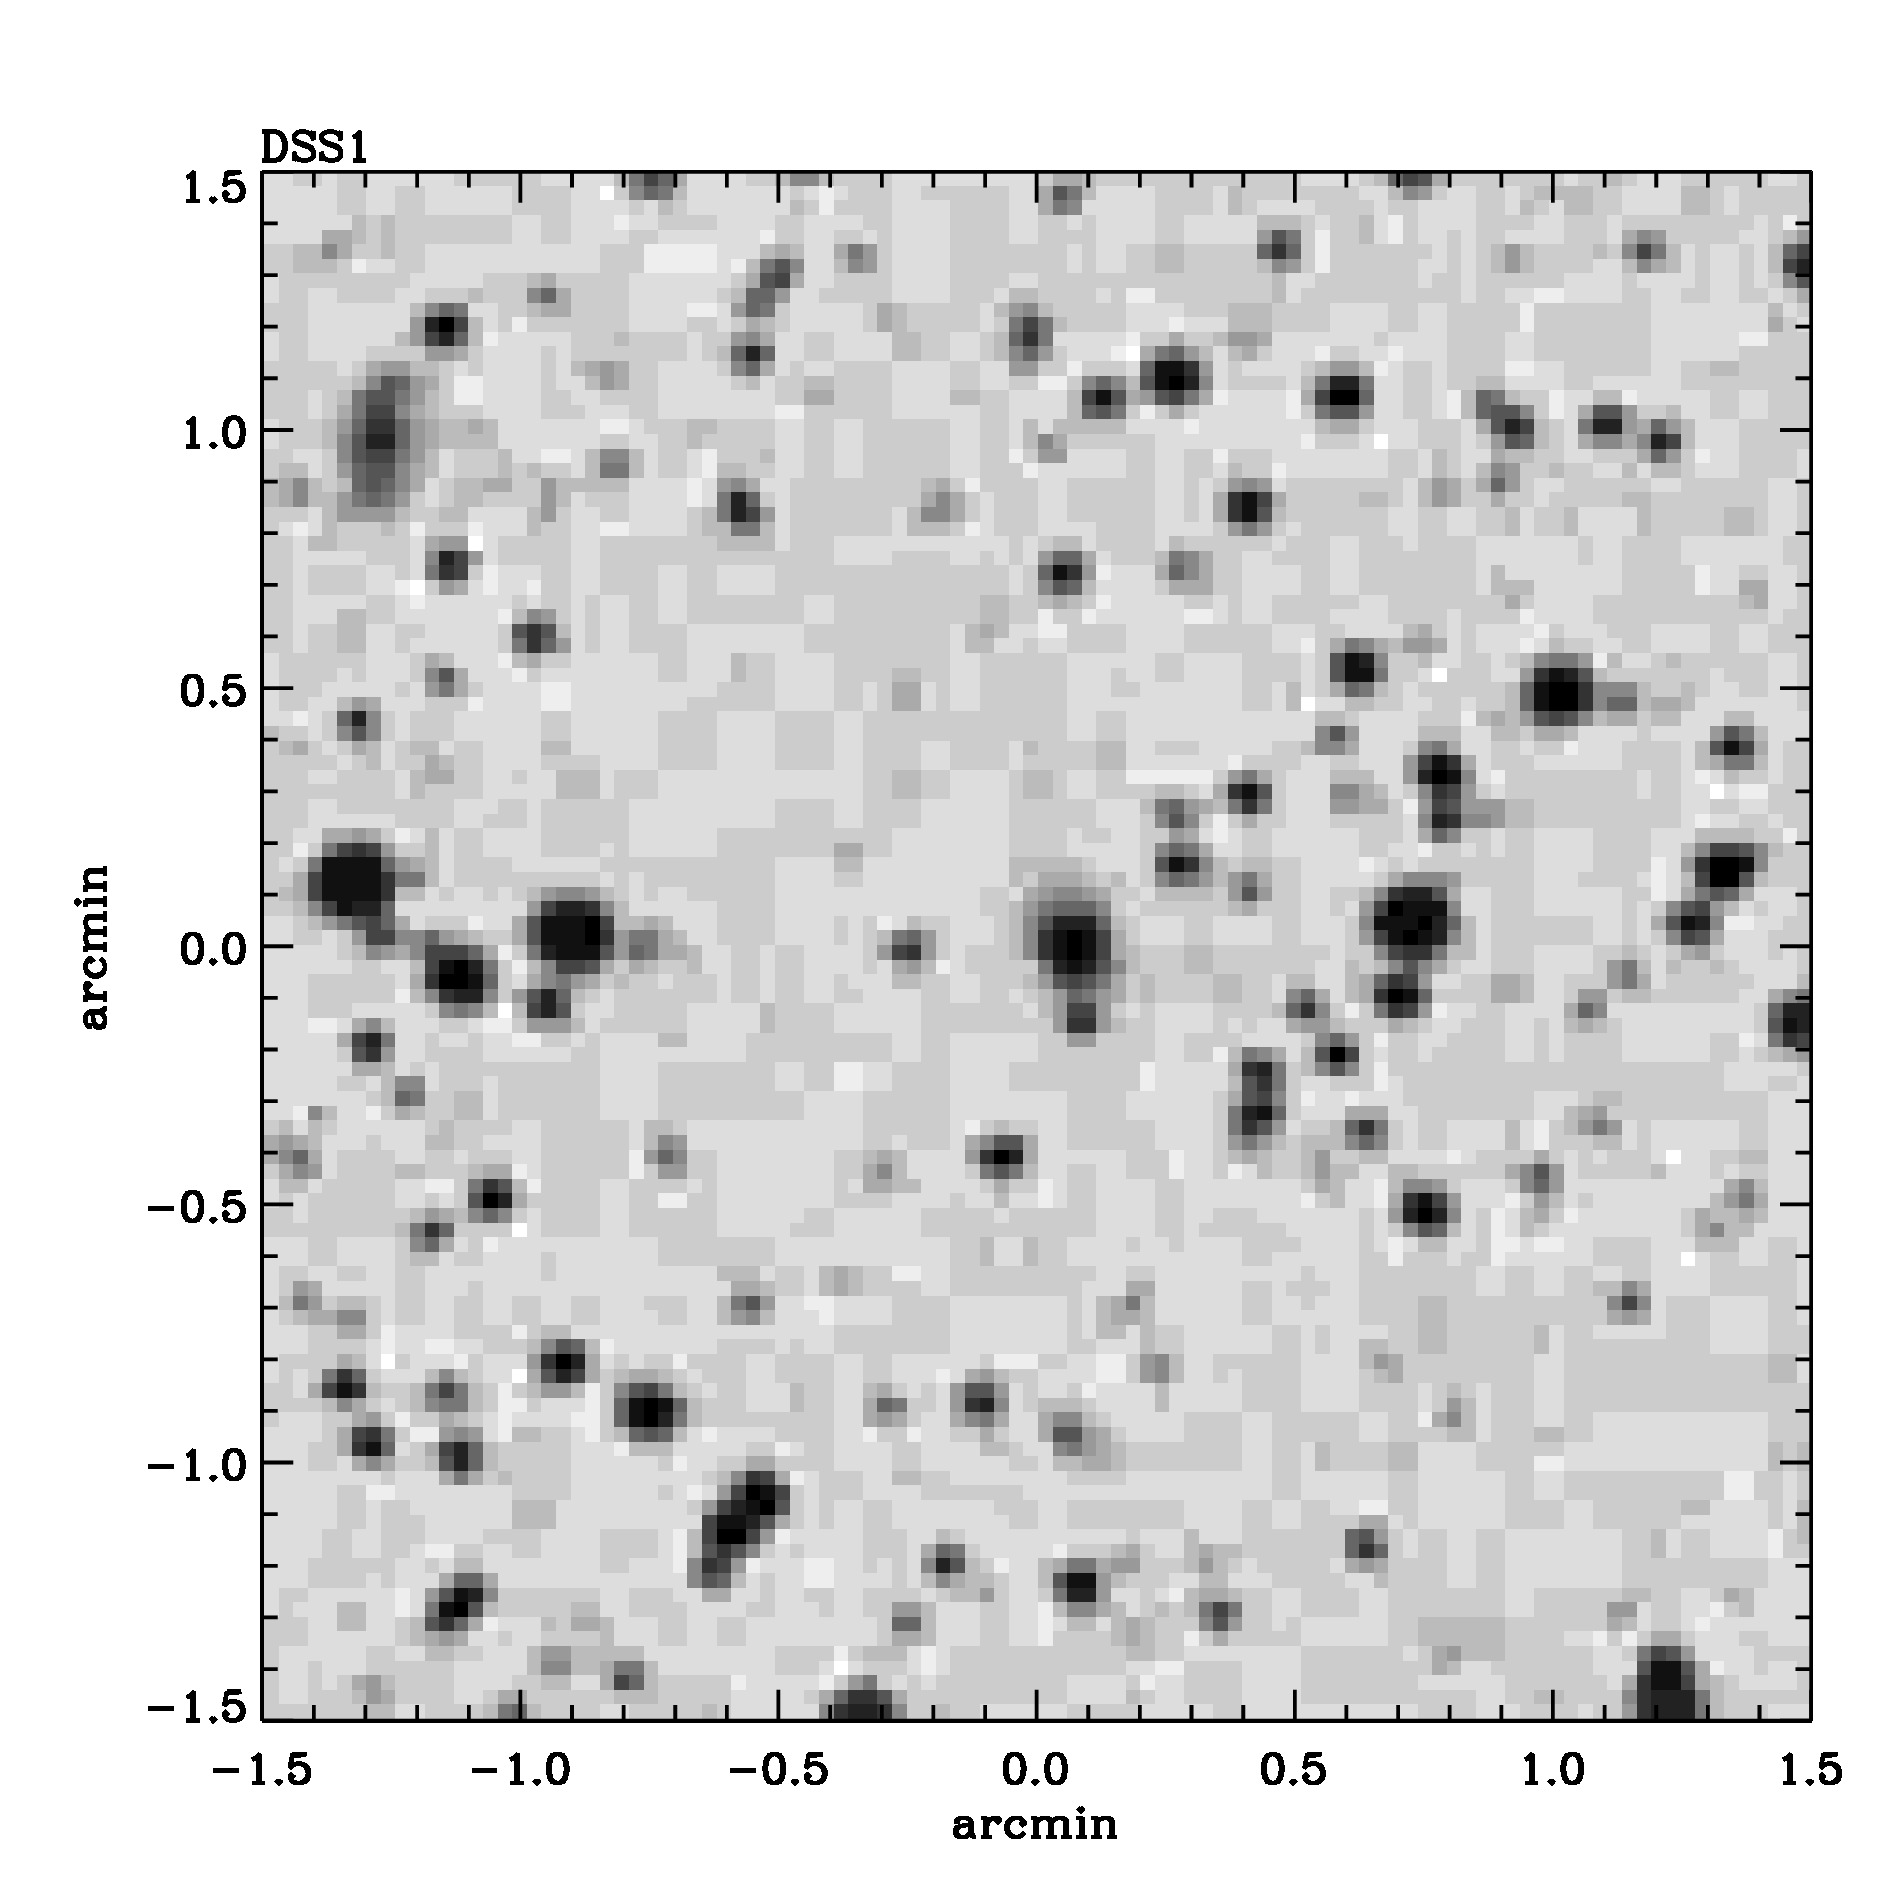 Optical image for SWIFT J2044.0+2832